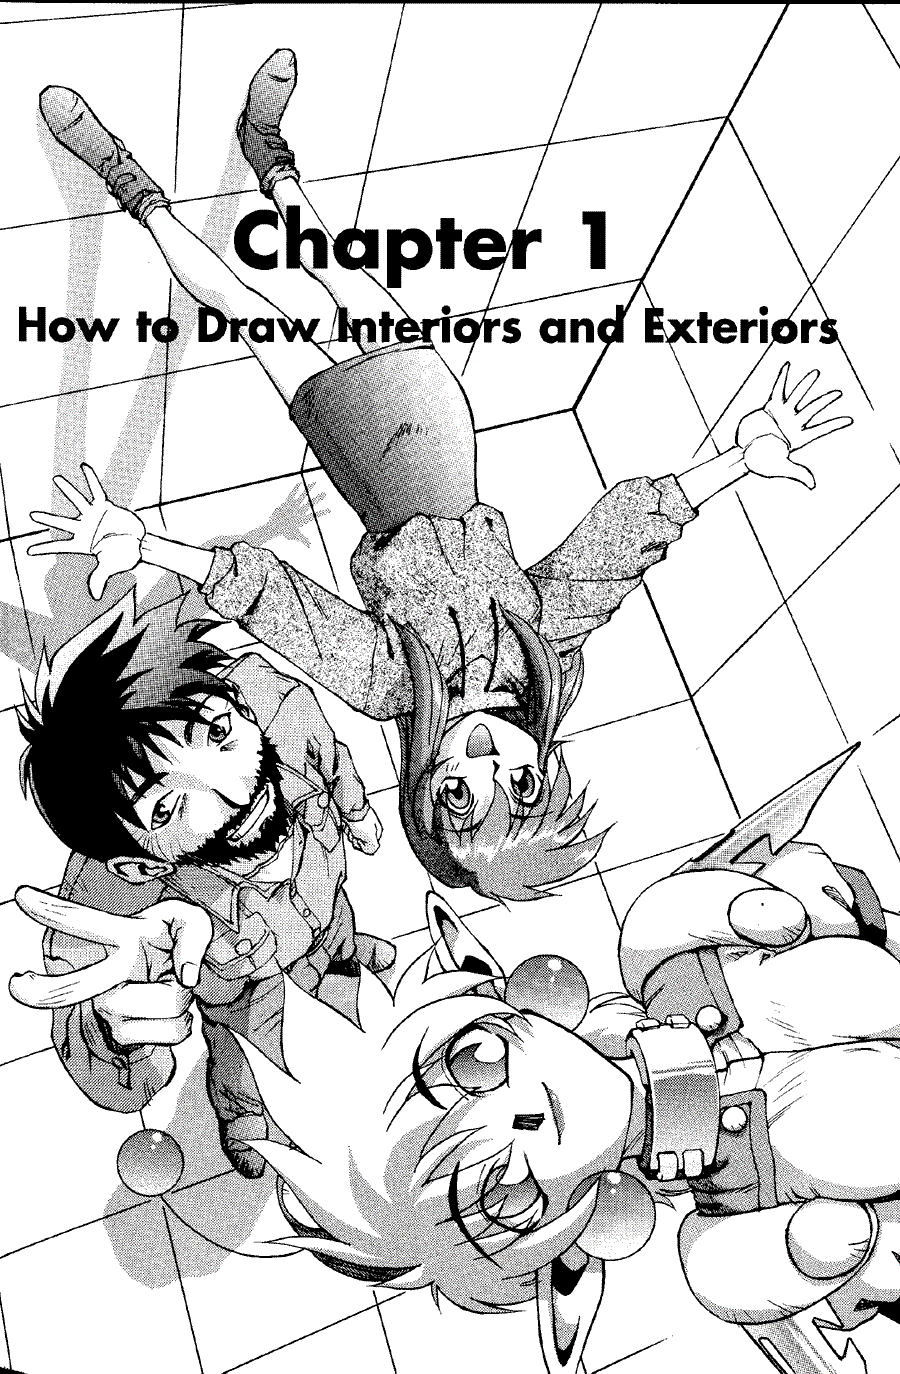 Now to draw Manga: Compiling Application - Now to draw Manga ></a>
<script language=JavaScript> 
  var txt = 